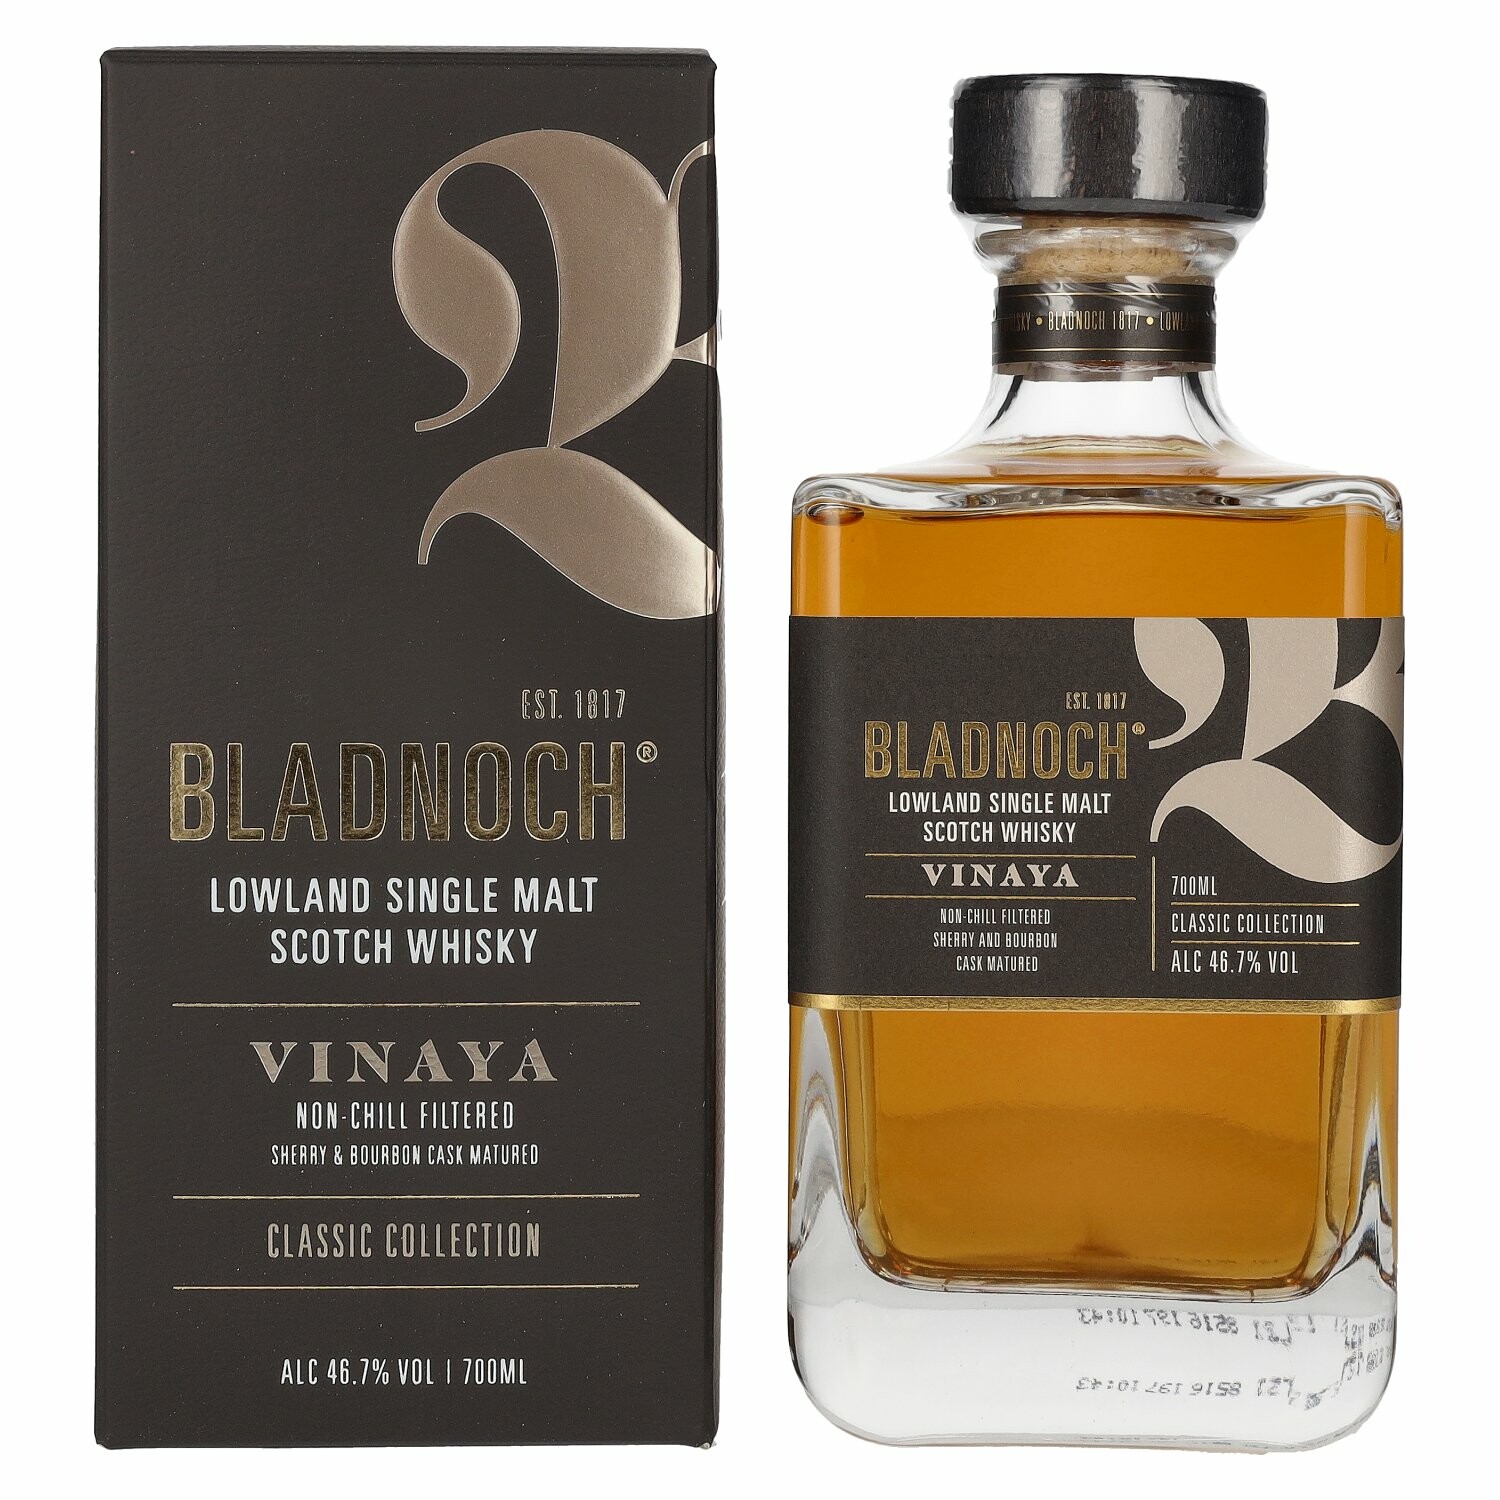 Bladnoch VINAYA Lowland Single Malt Scotch Whisky 46,7% Vol. 0,7l in Giftbox